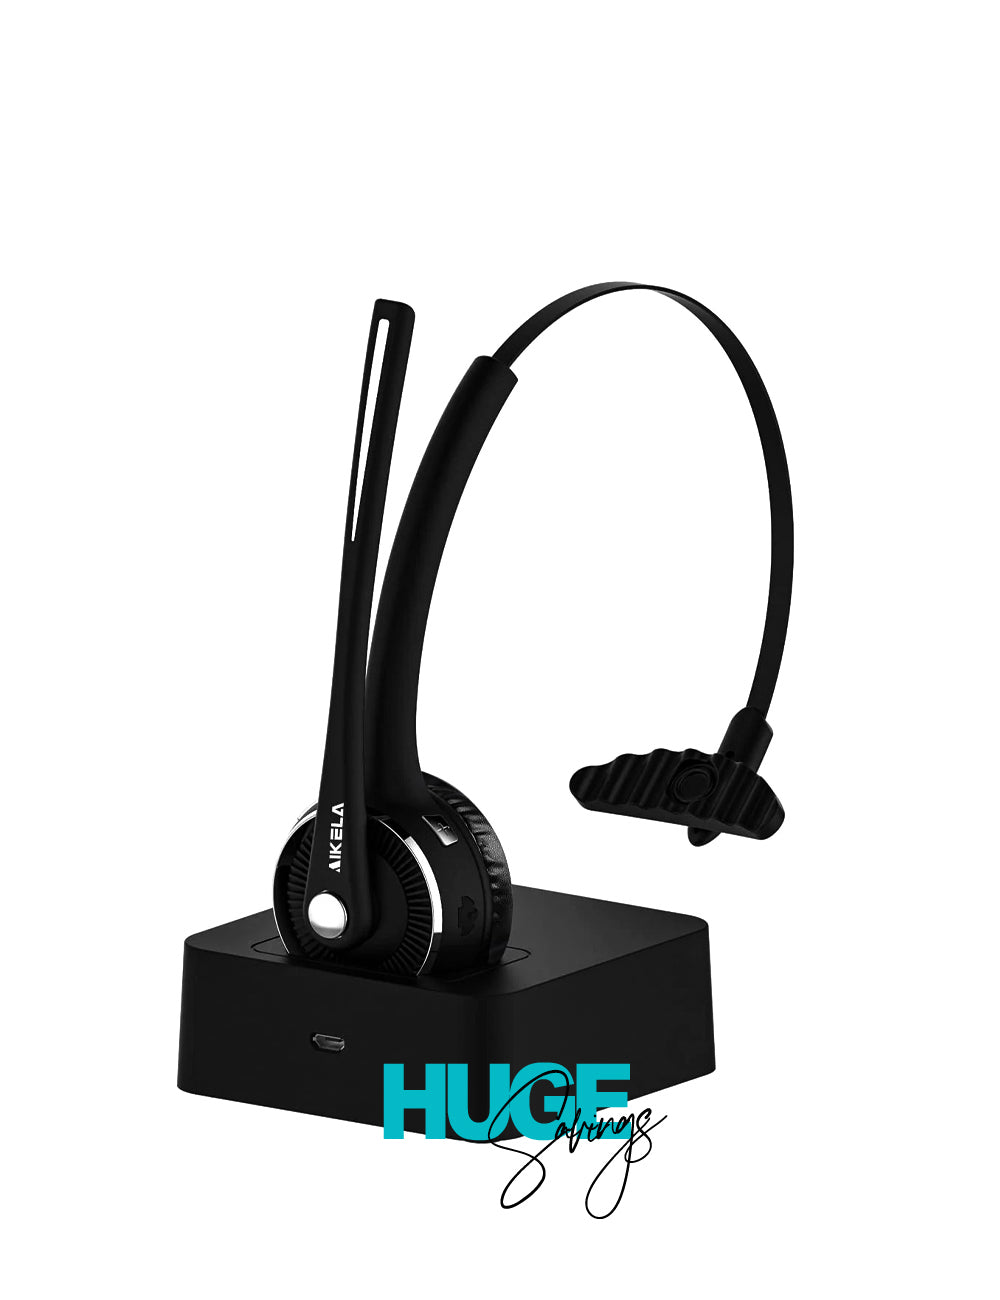 15 Hrs Wireless Headset Talktime  AIKELA V5.0 Bluetooth Headset with Charging Station.for Call Center, Office, Skype.  (LNC)